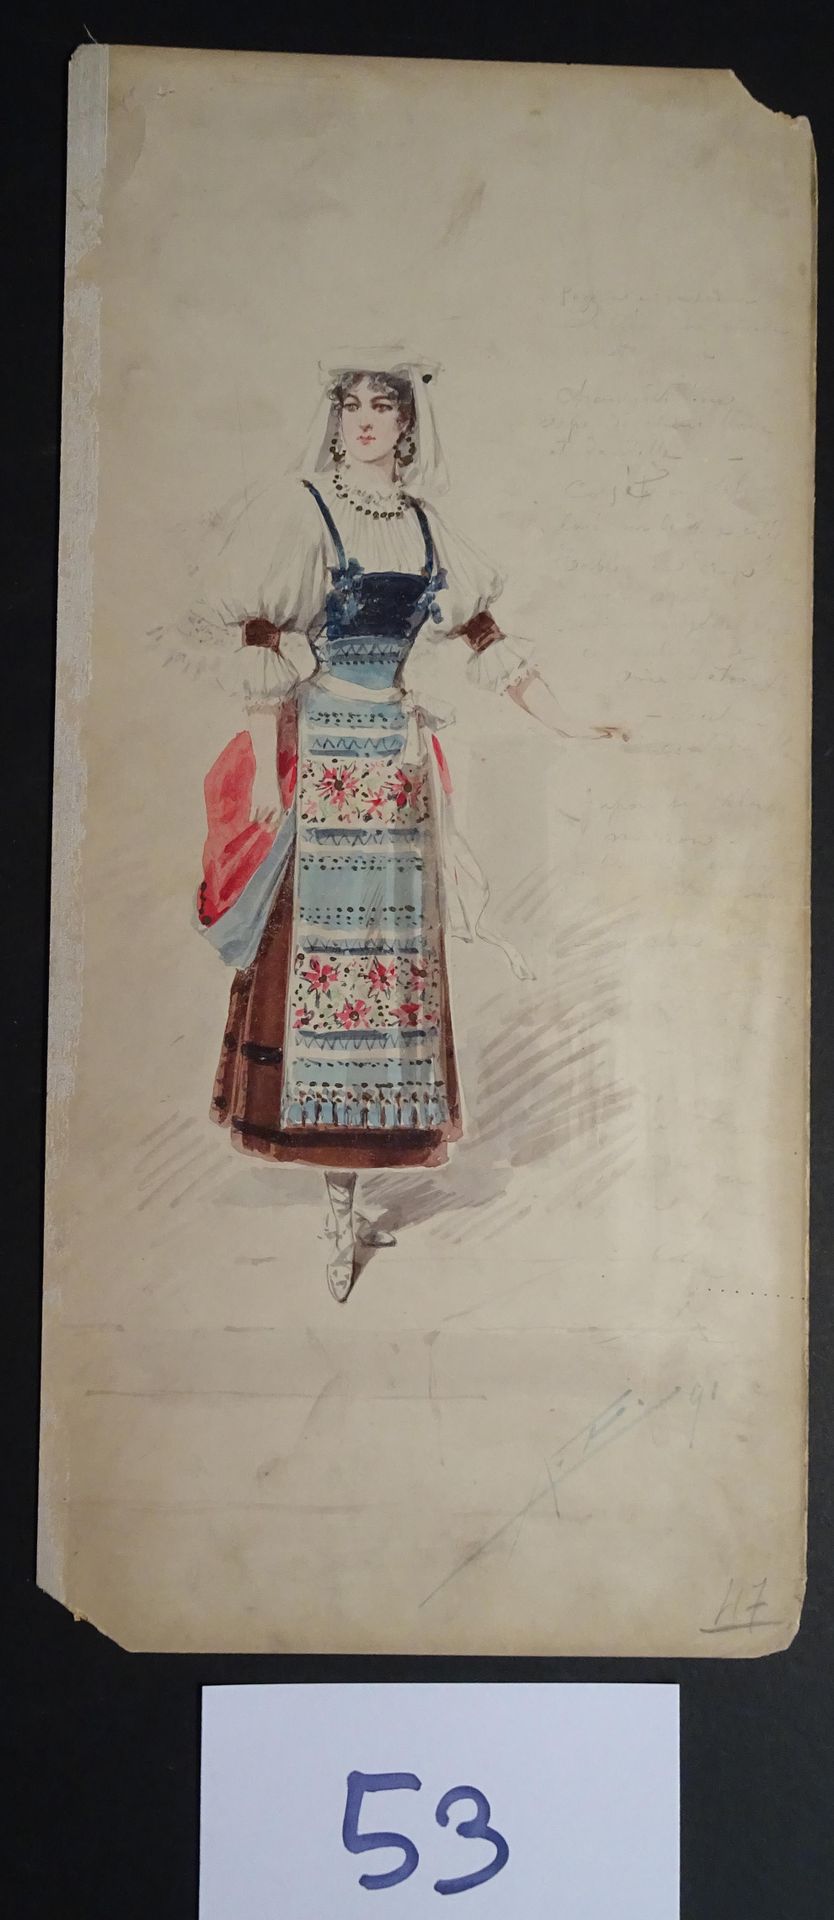 EDEL EDEL ALFREDO ( 1859-1912)

" Femme à la robe fleuri ". Gouache, aquarelle e&hellip;